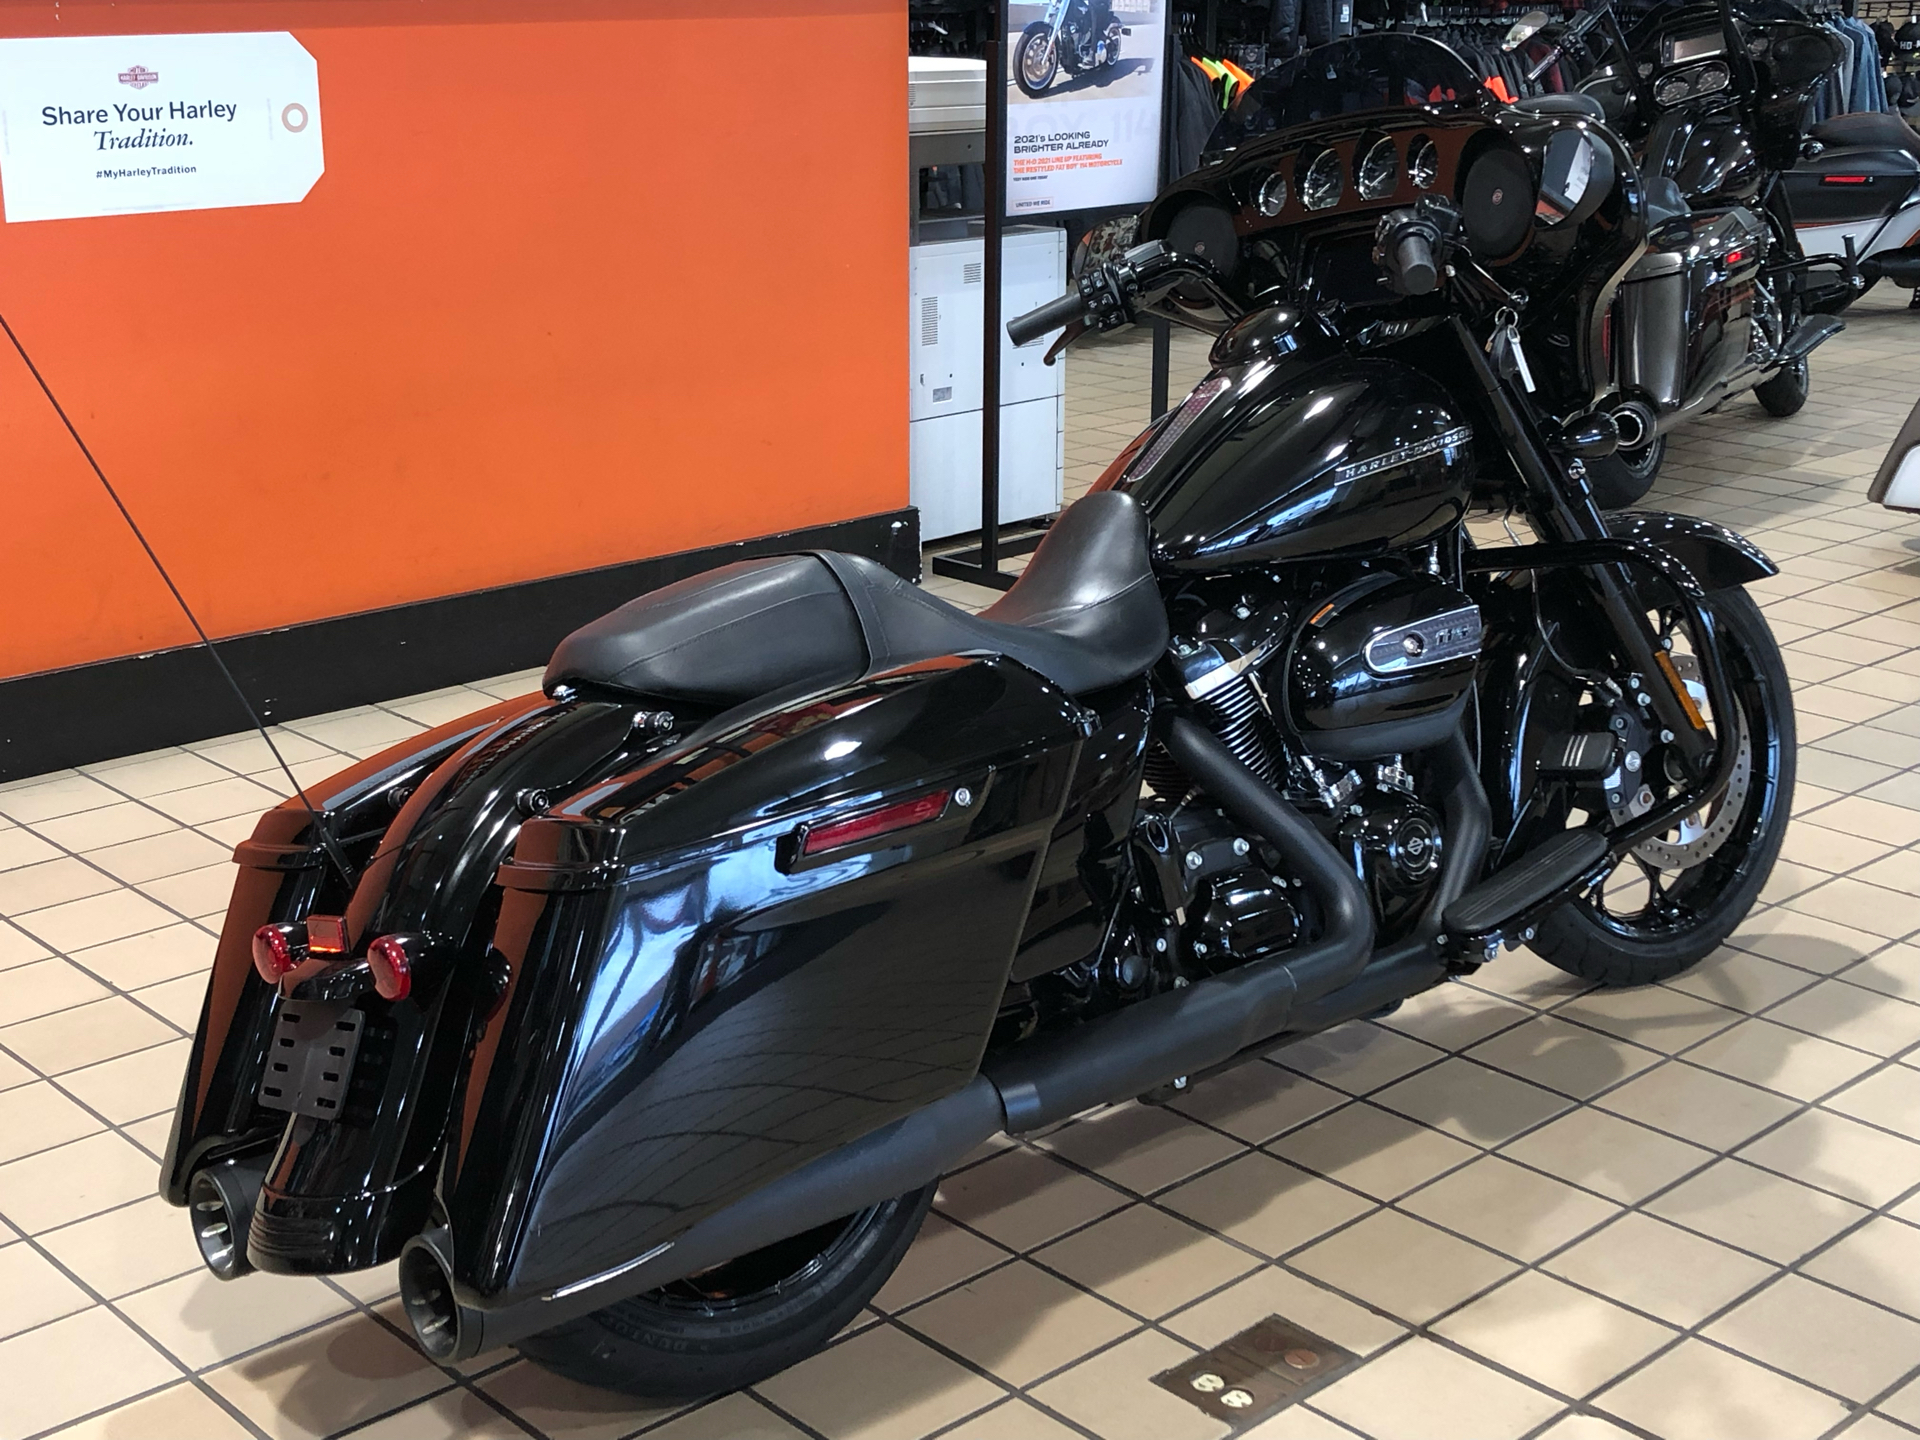 2020 Harley-Davidson Street Glide® Special in Dumfries, Virginia - Photo 4